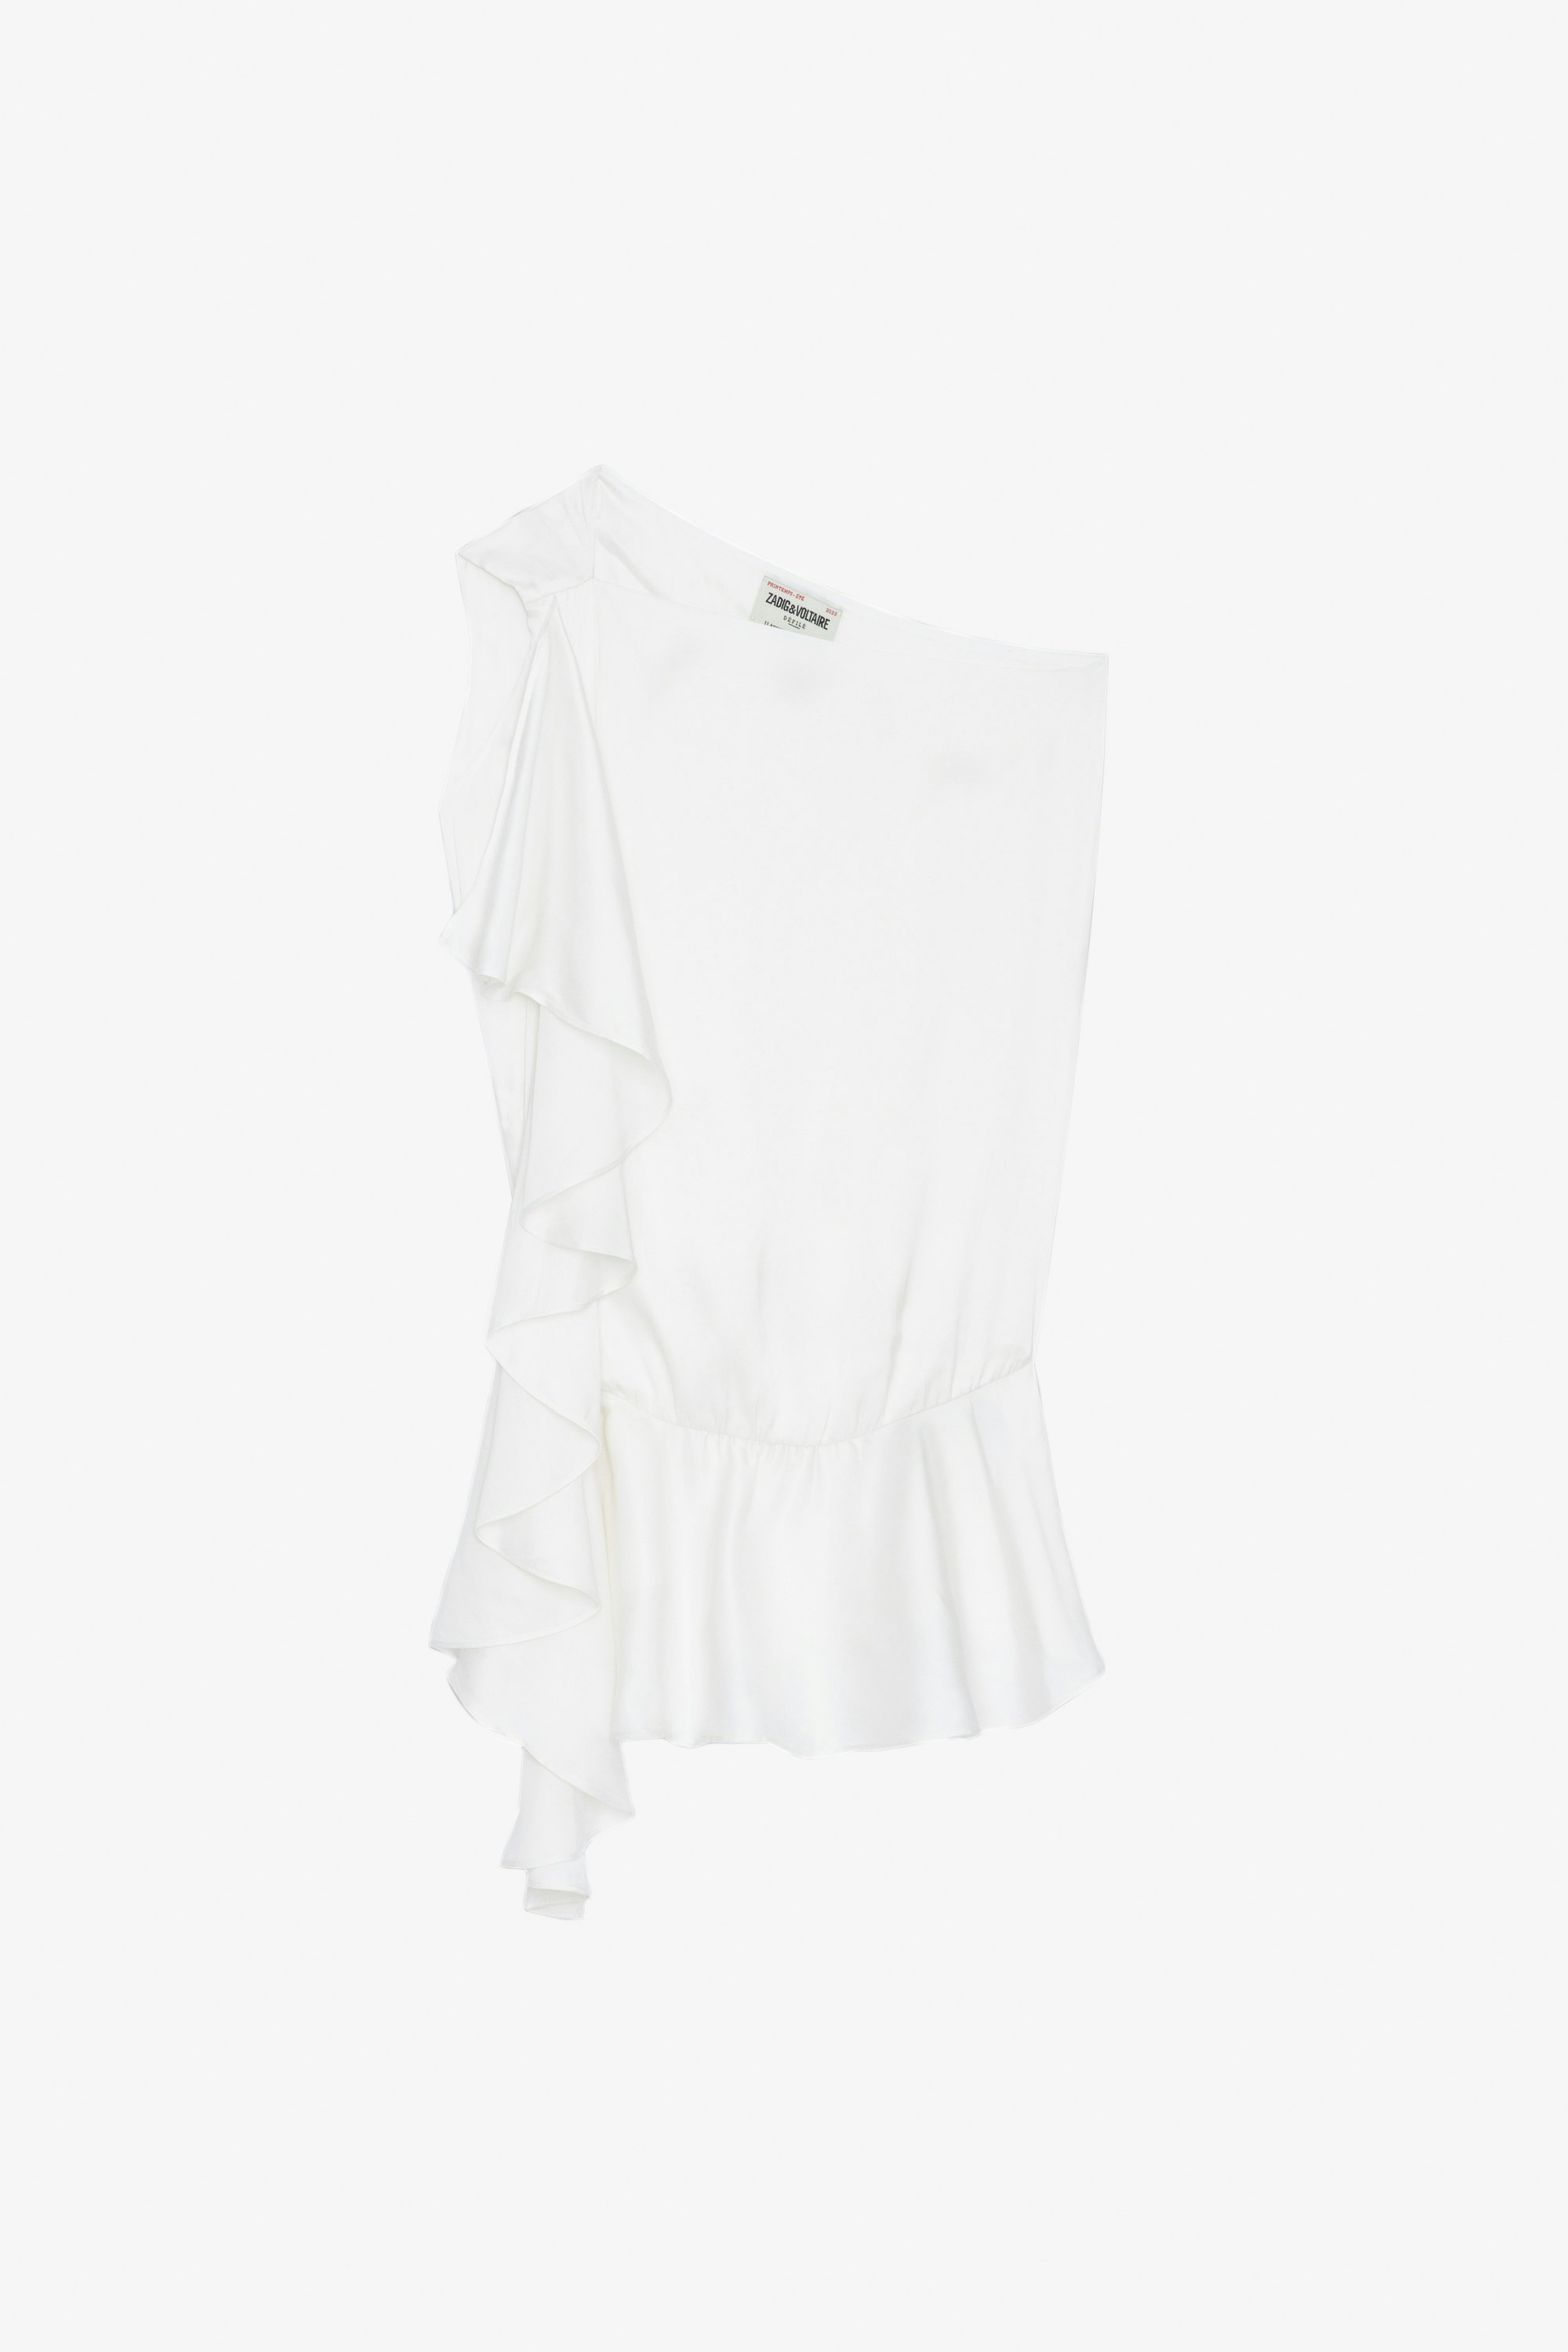 Tic Satin Top - Women's asymmetrical draped off-white satin top